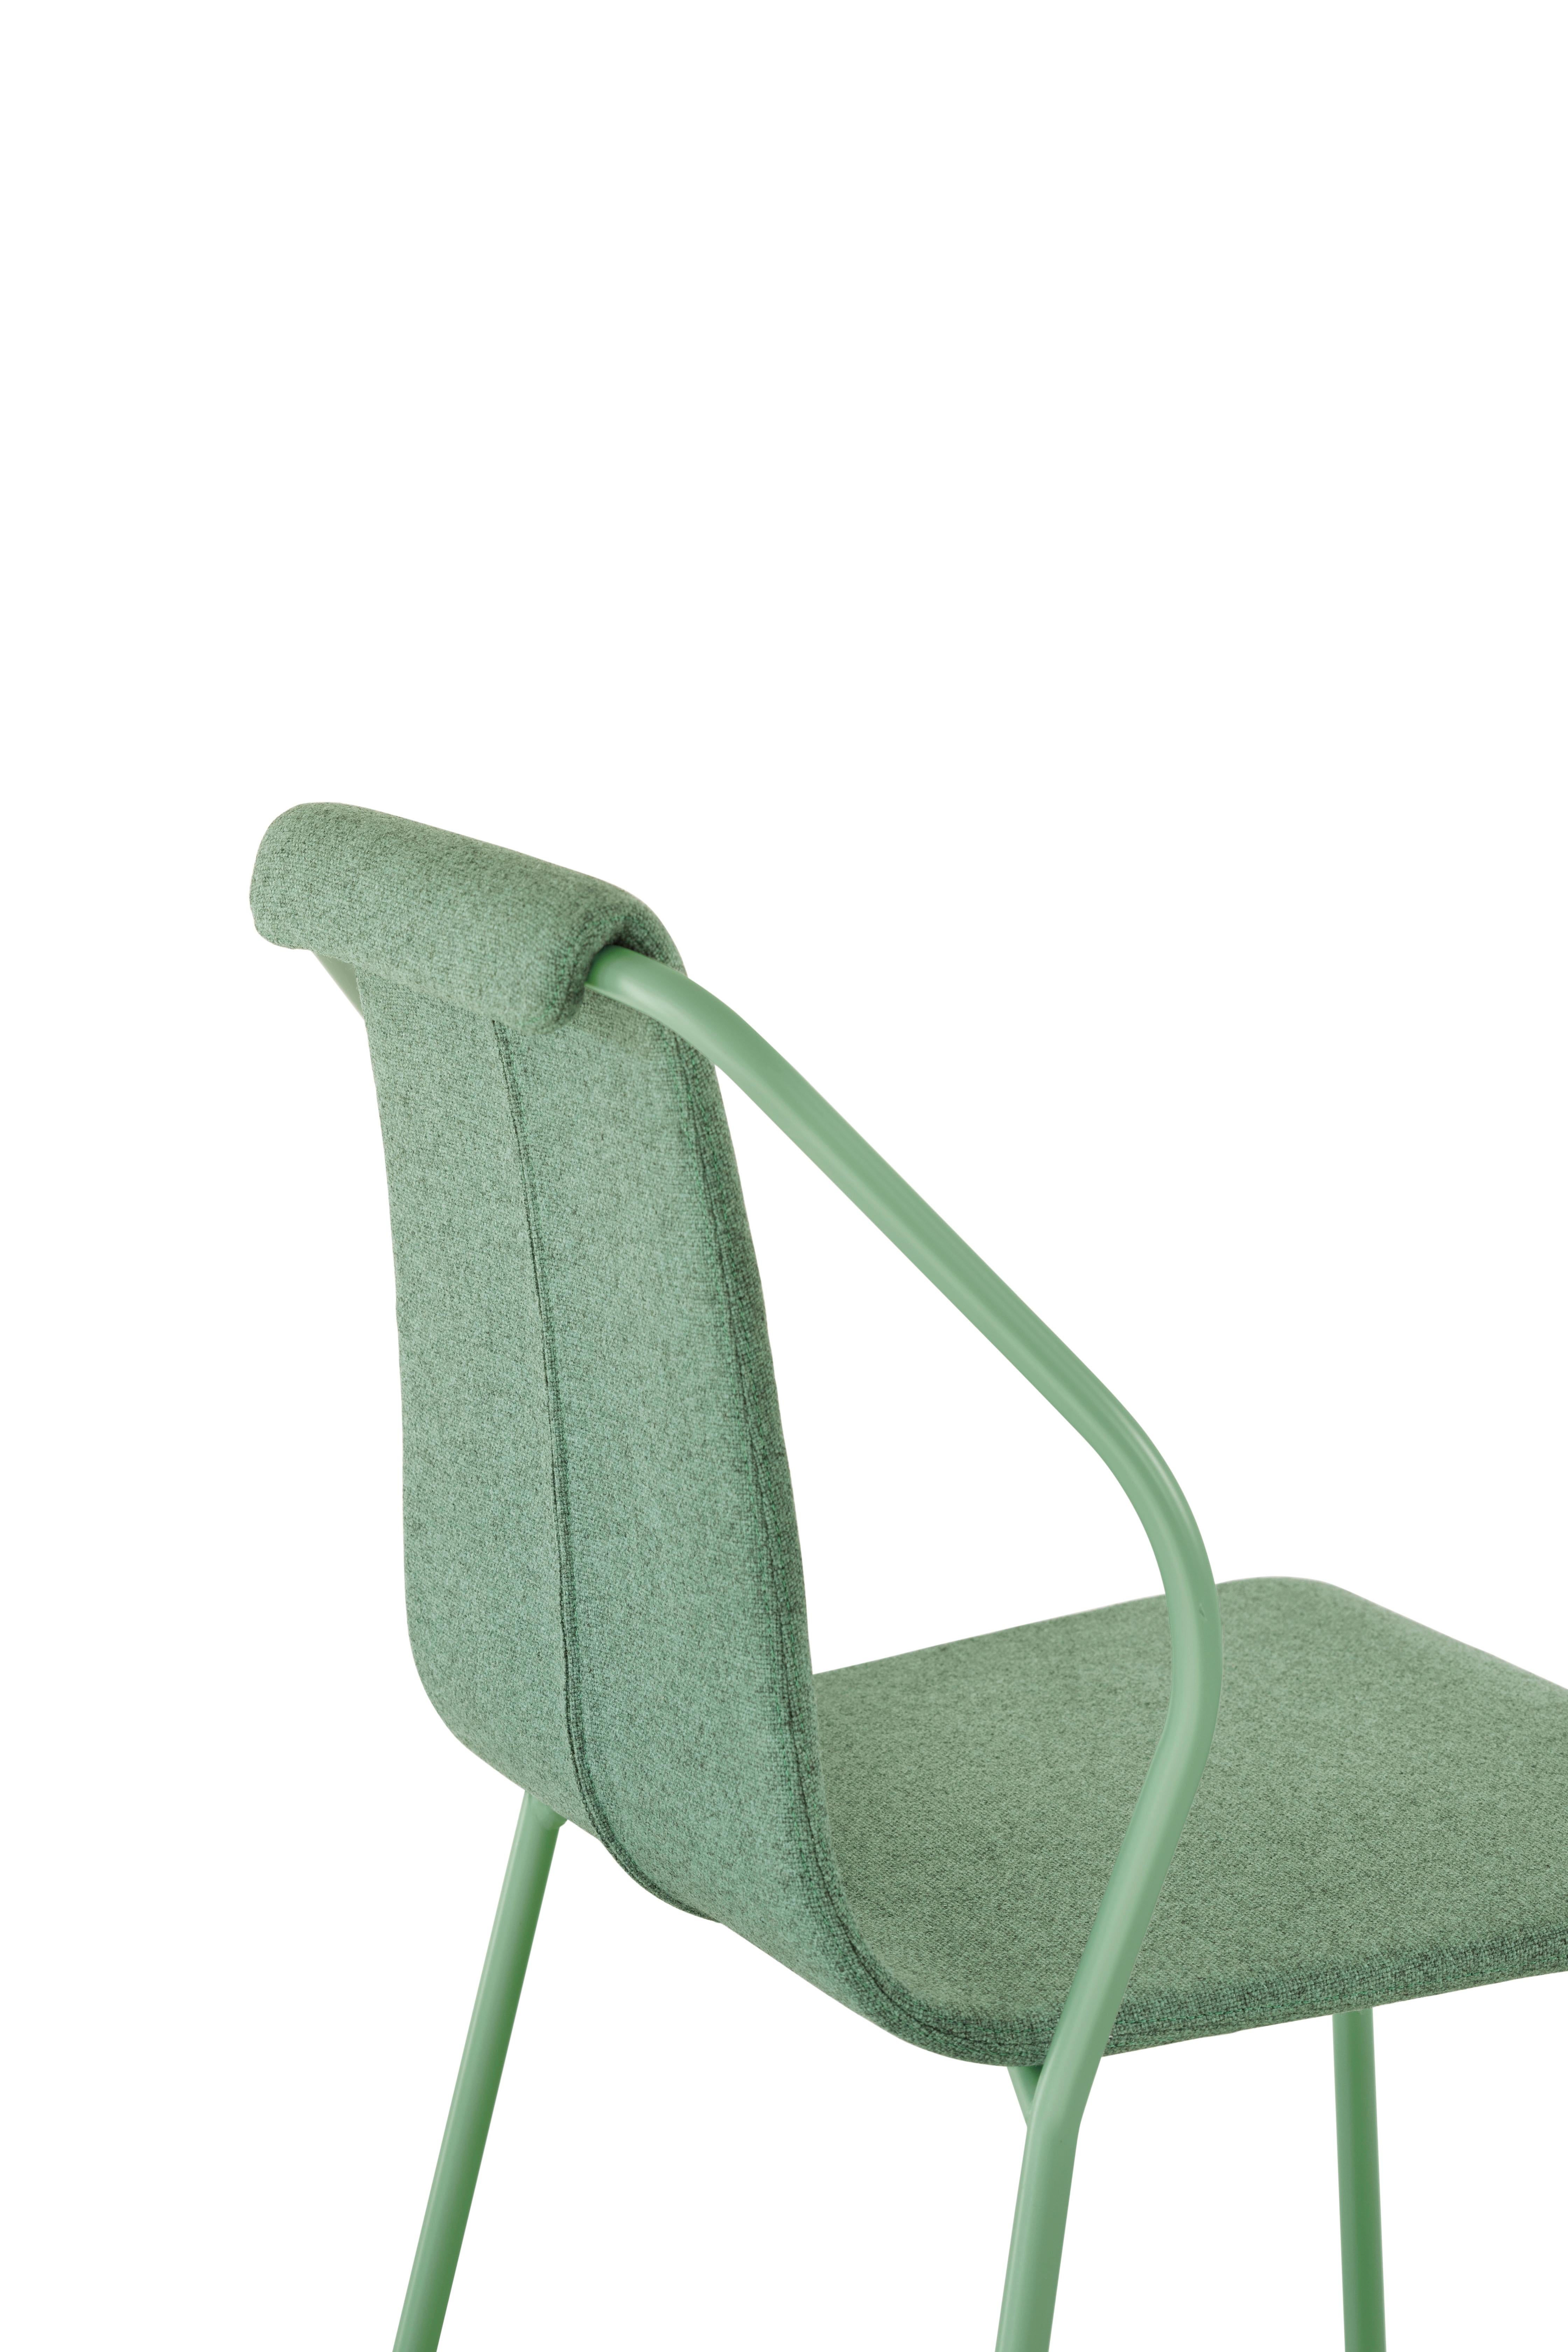 Modern Baleri Italia Donna Indoor Chair in Green Fabric by Studio Irvine For Sale